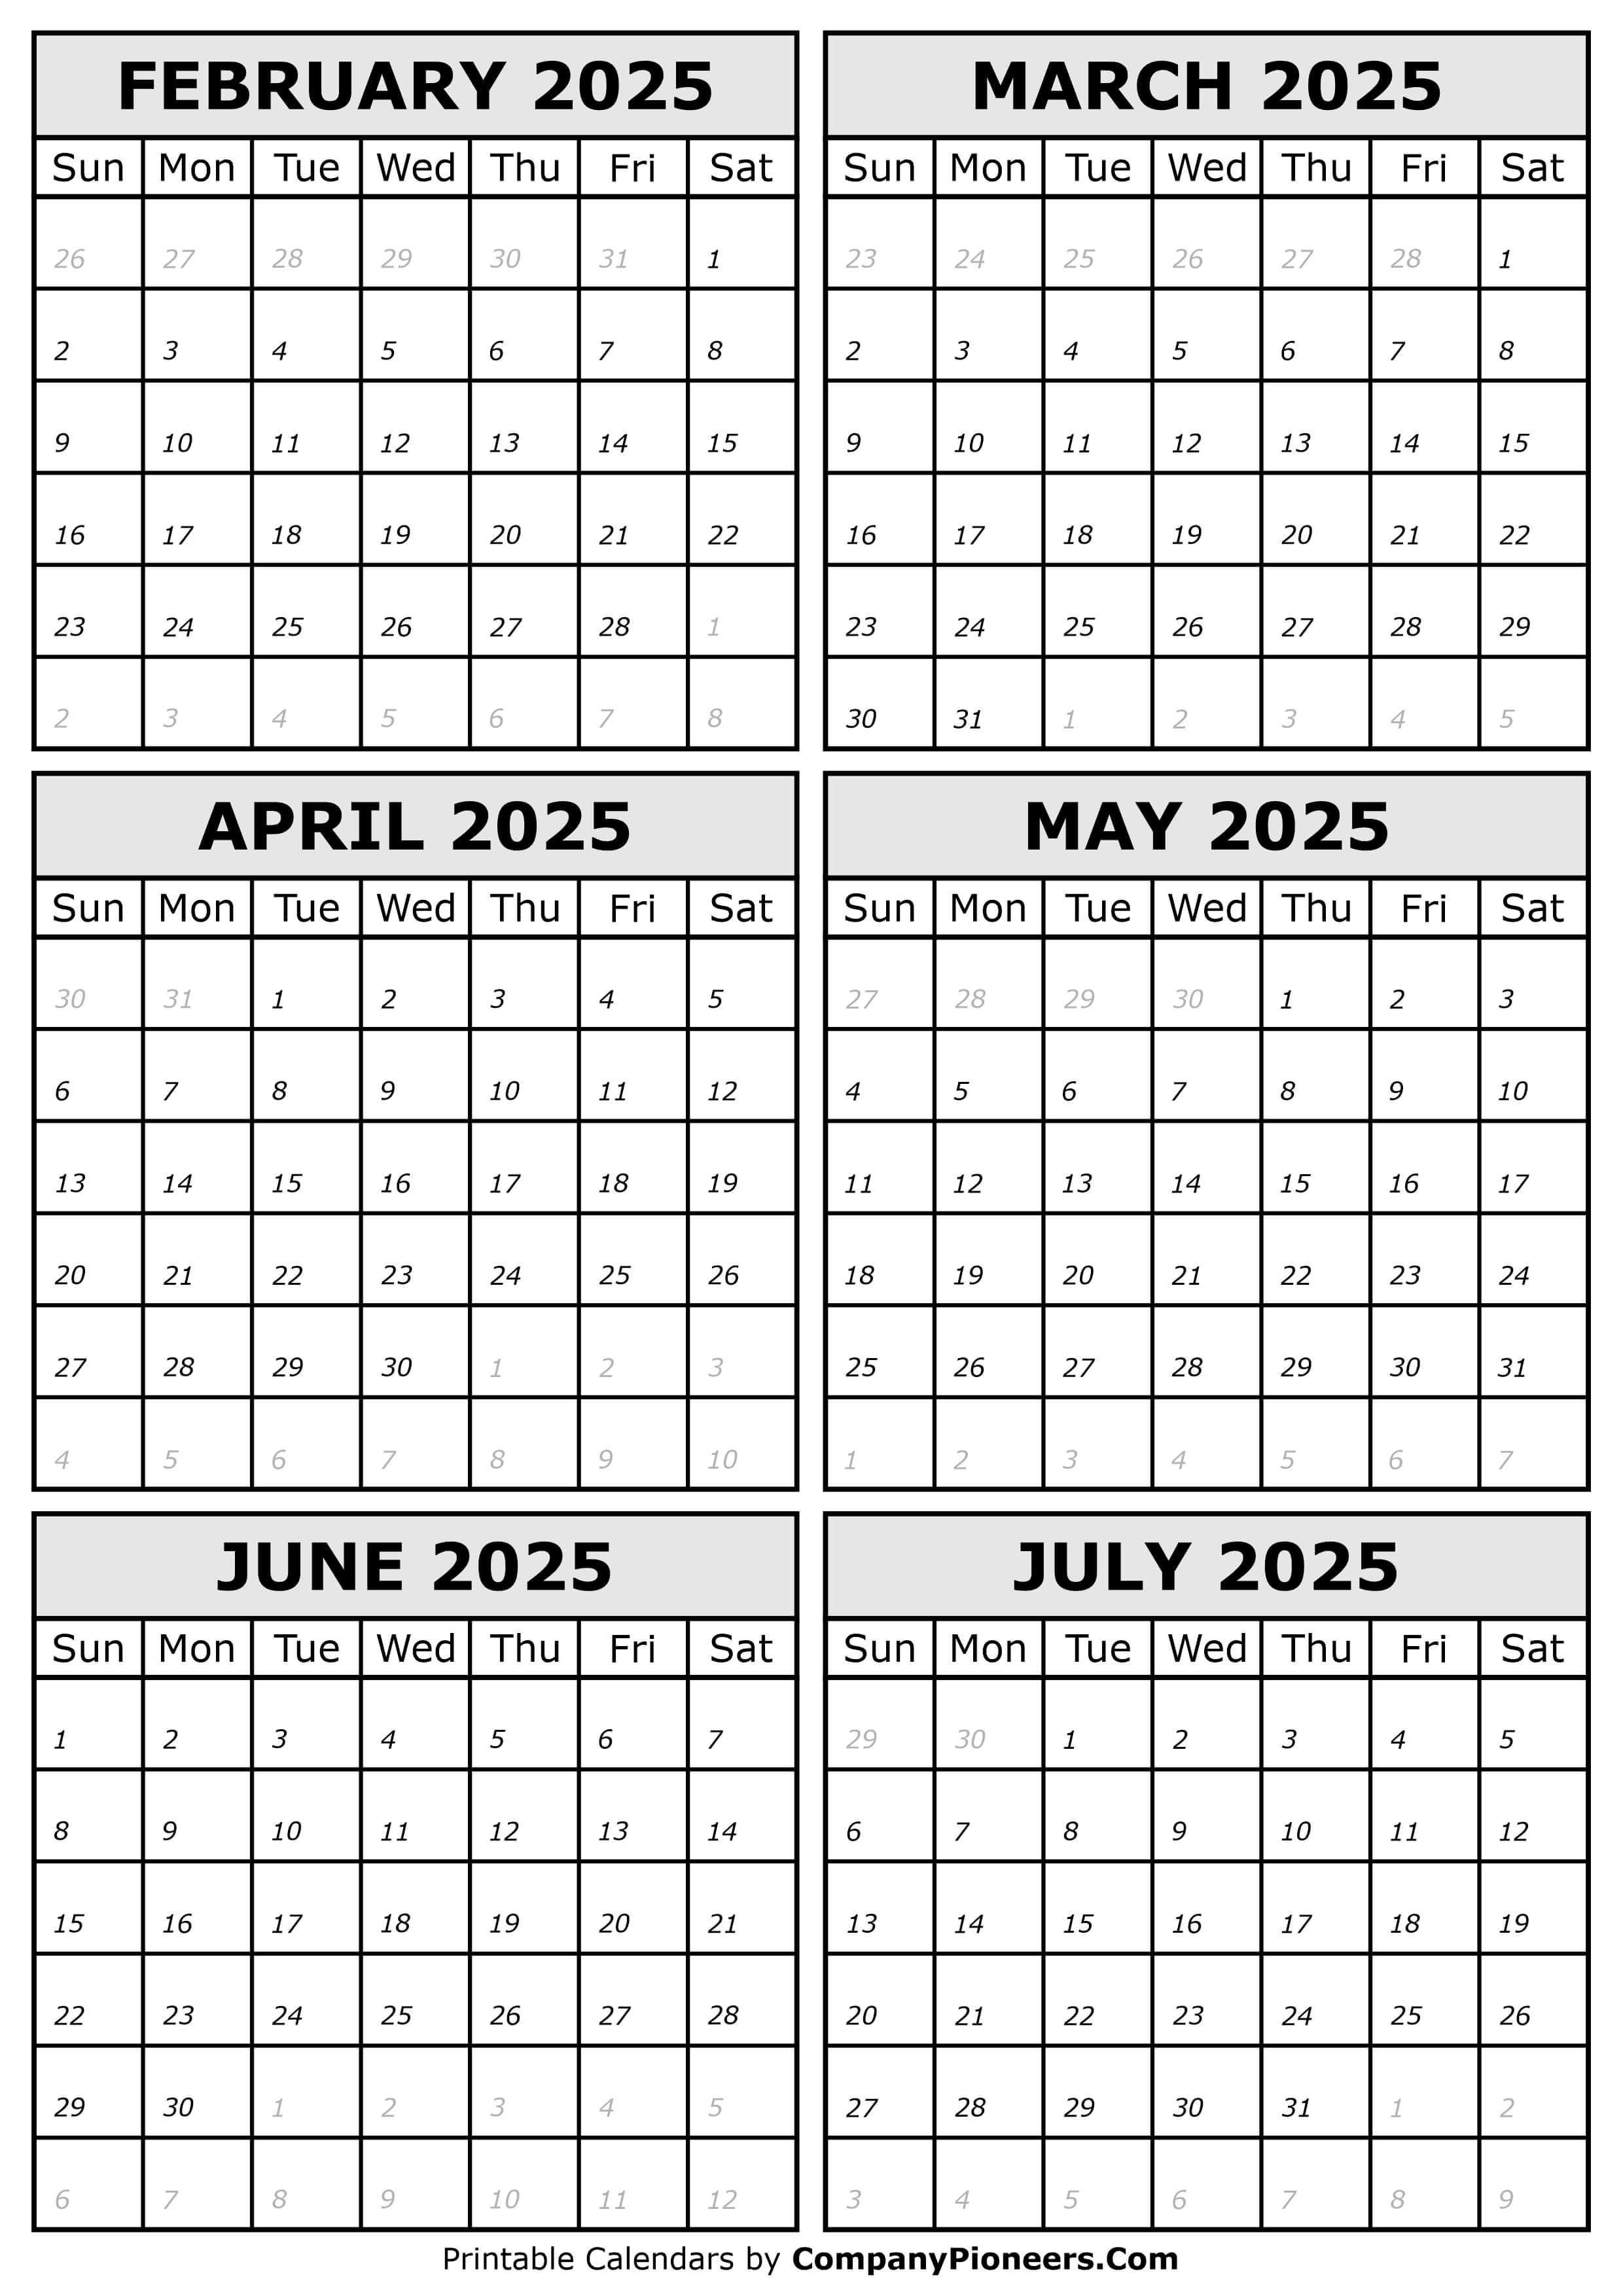 2025 February to July Calendar